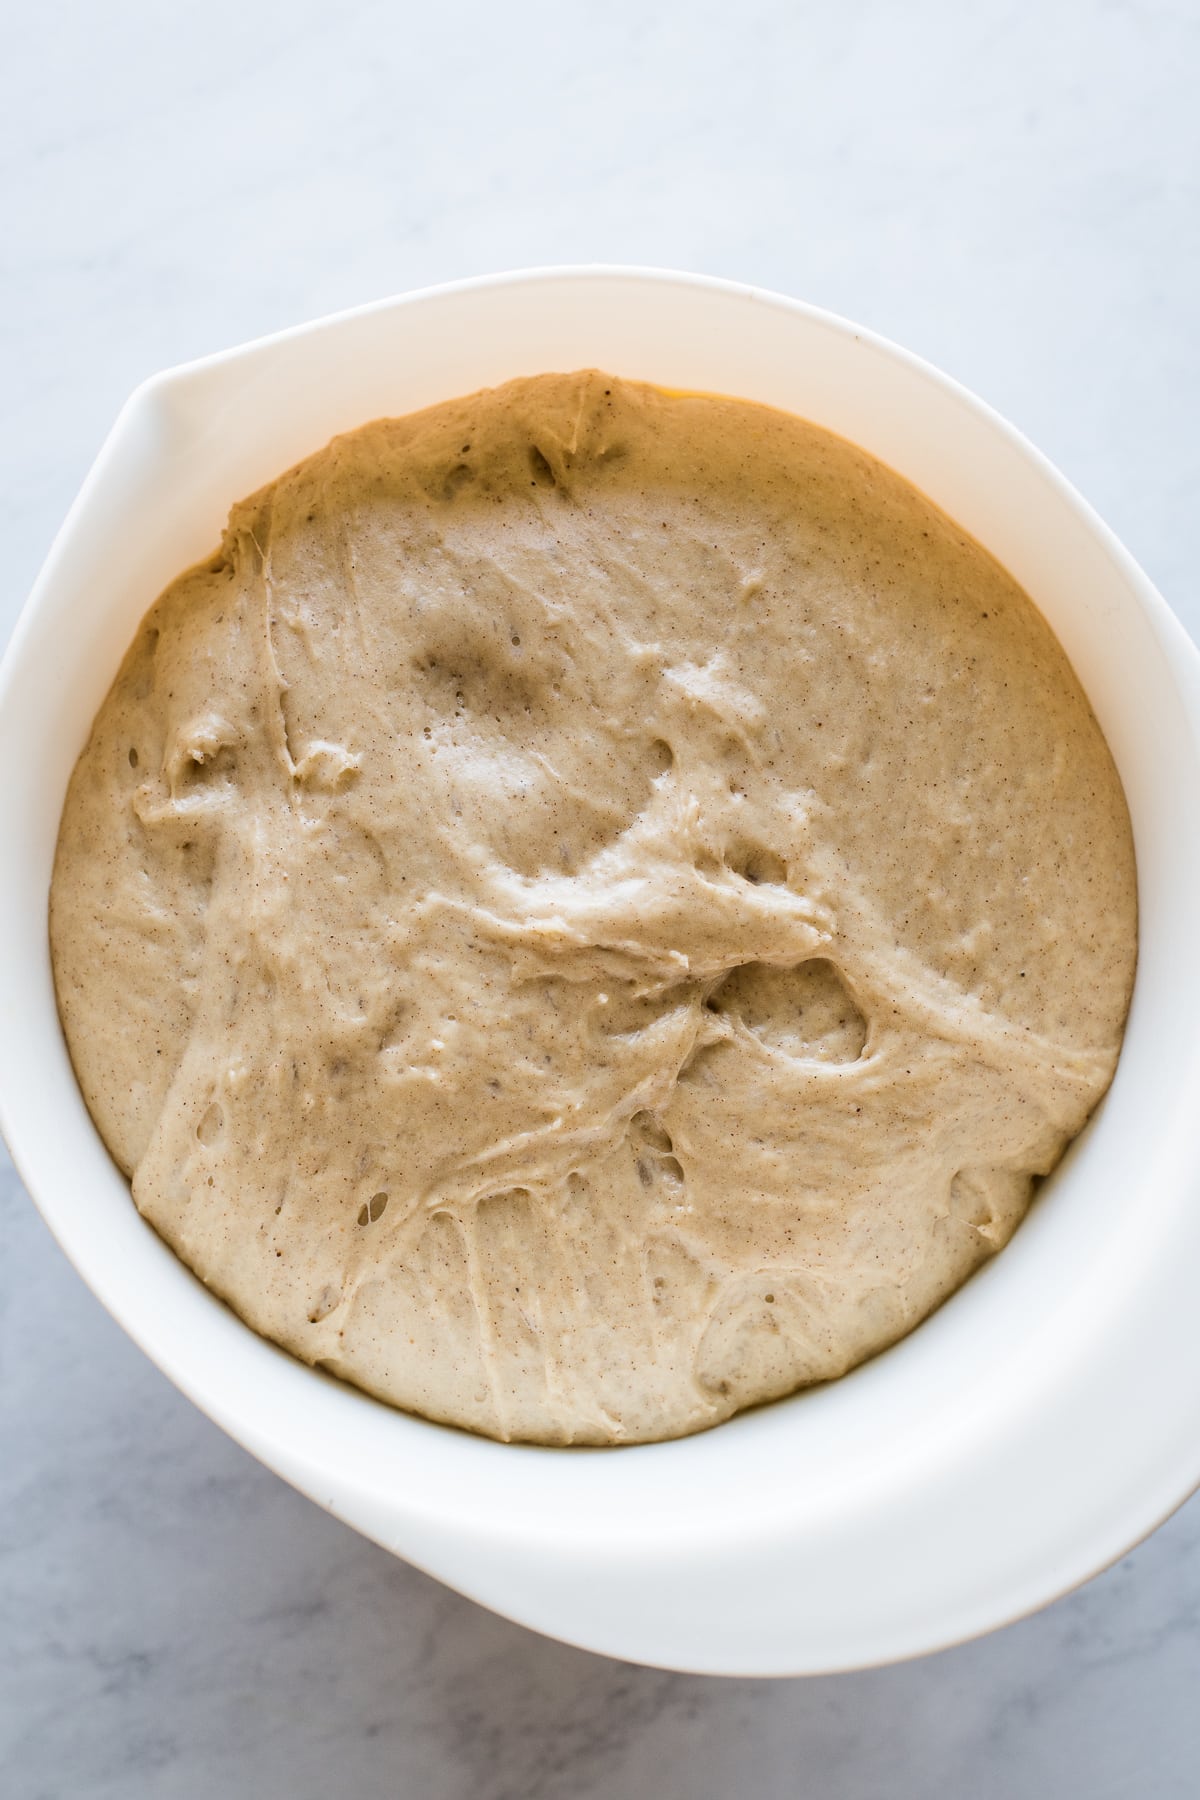 Yeasted bread dough for pumpkin empanadas in a bowl.